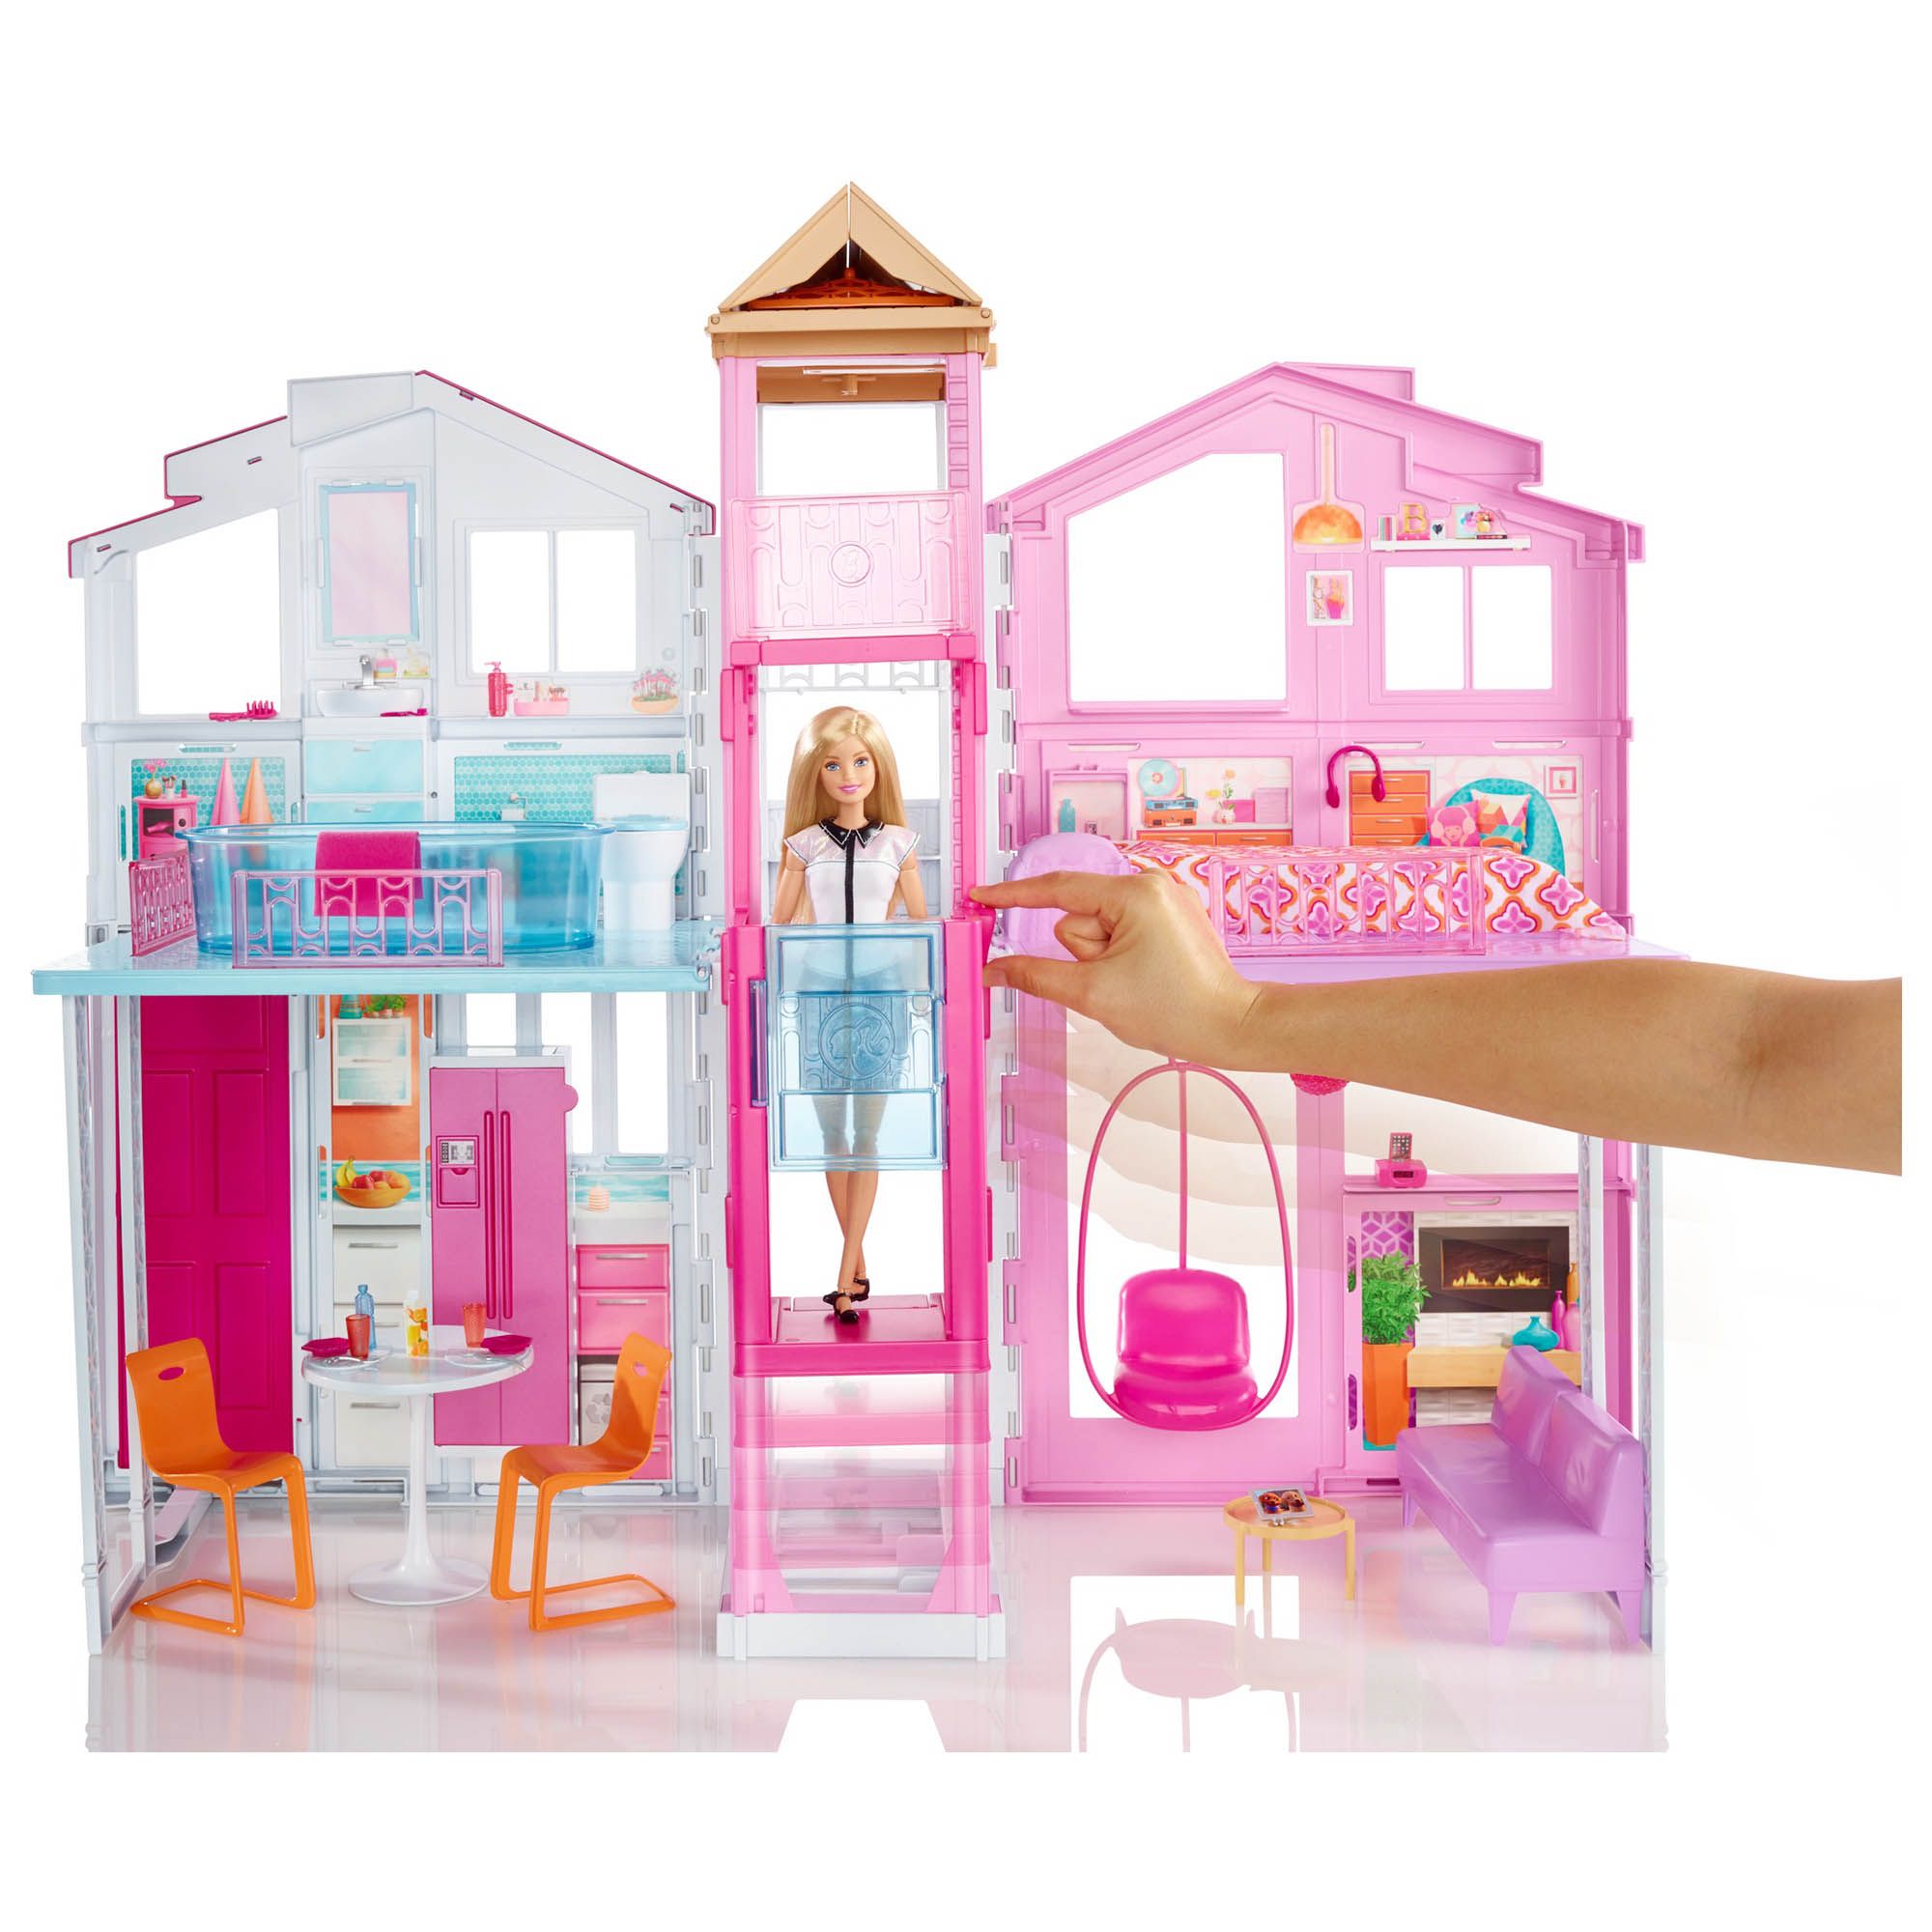 Барби дом взломка. Городской домик Малибу Барби. Barbie дом Малибу. Barbie dly32 Барби городской дом Малибу. Mattel Barbie fhy73 Барби "дом мечты".